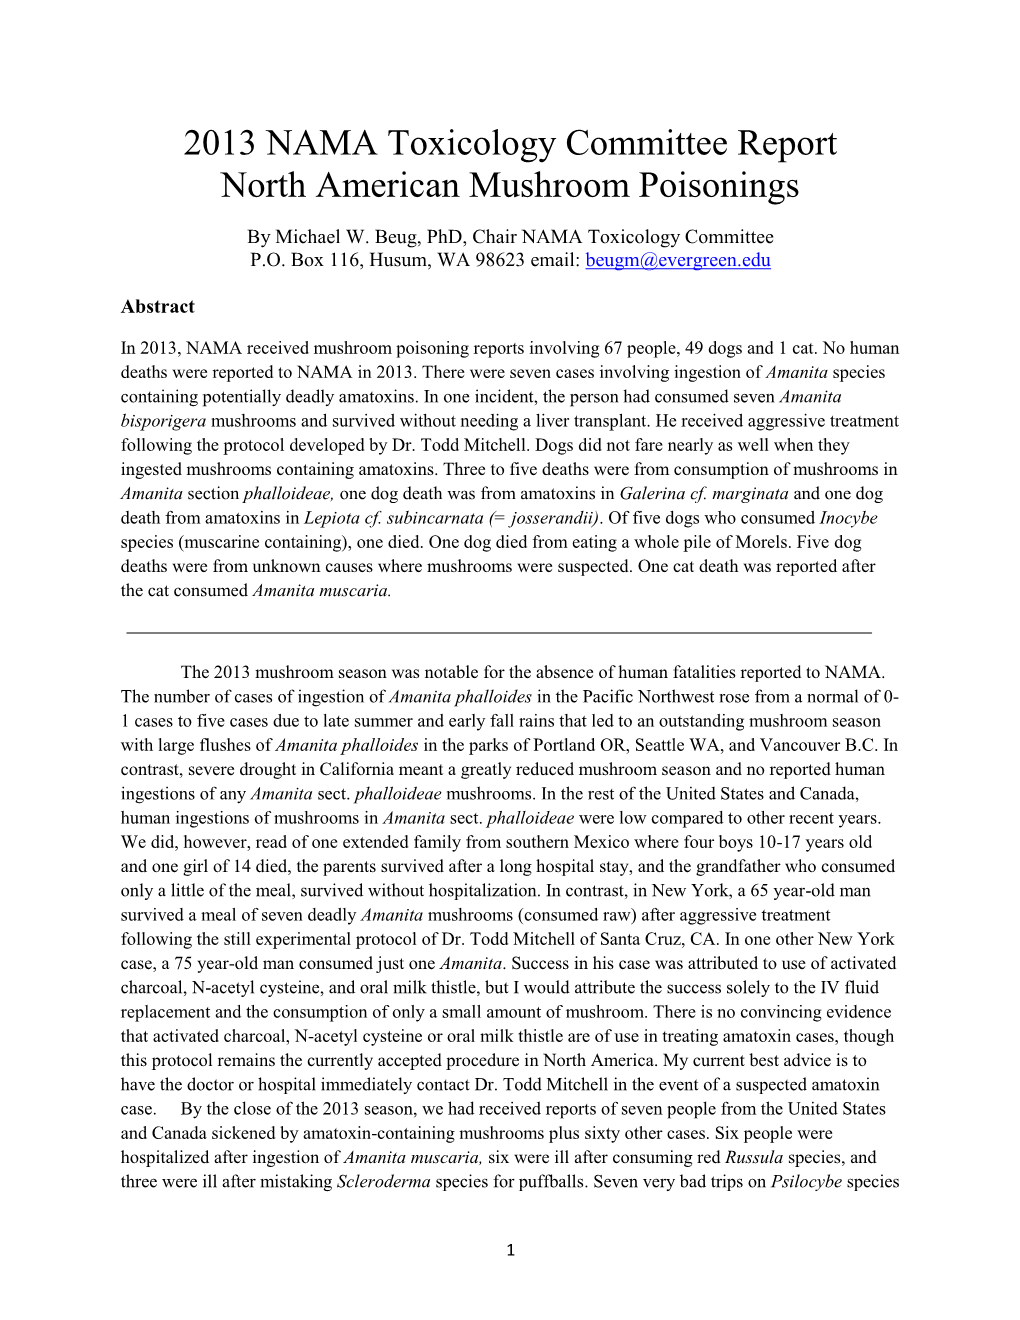 2013 NAMA Toxicology Committee Report North American Mushroom Poisonings